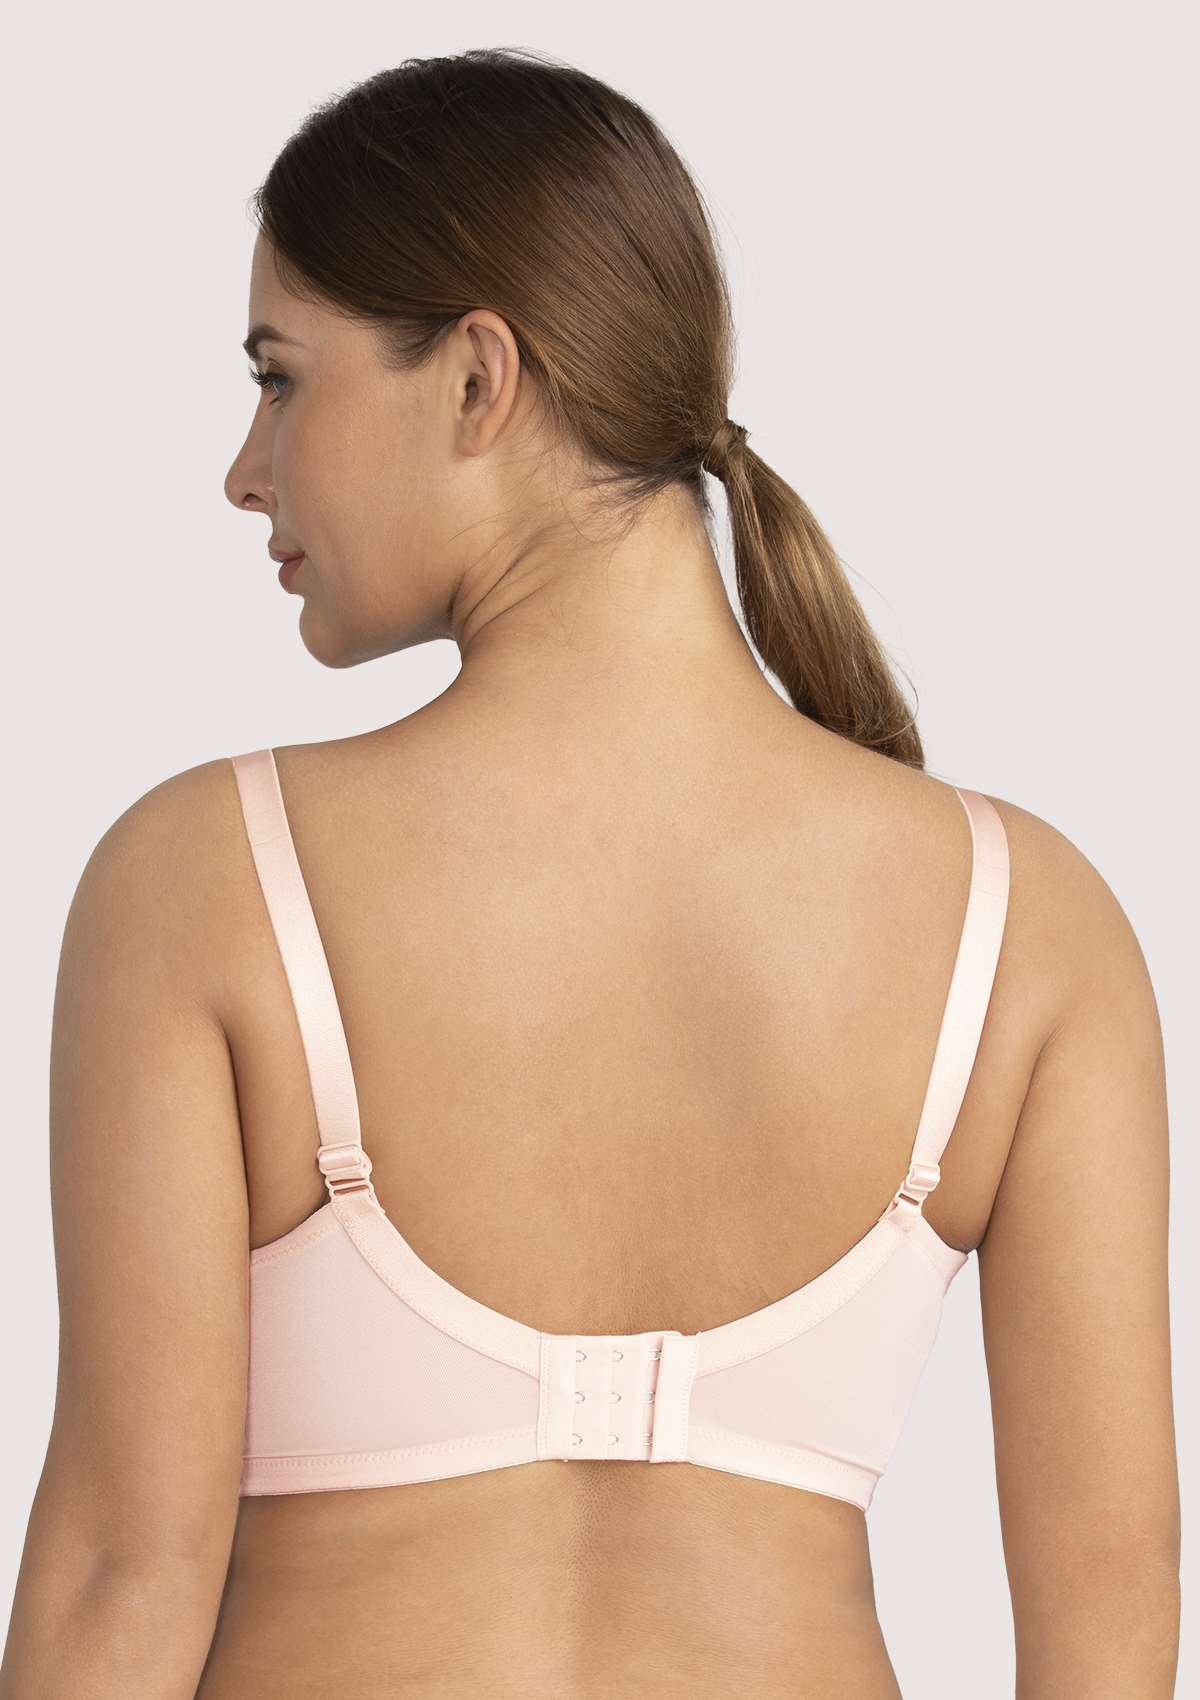 HSIA Sunflower Matching Bra And Panties Set: Comfortable Plus Size Bra - Pink / 42 / DD/E